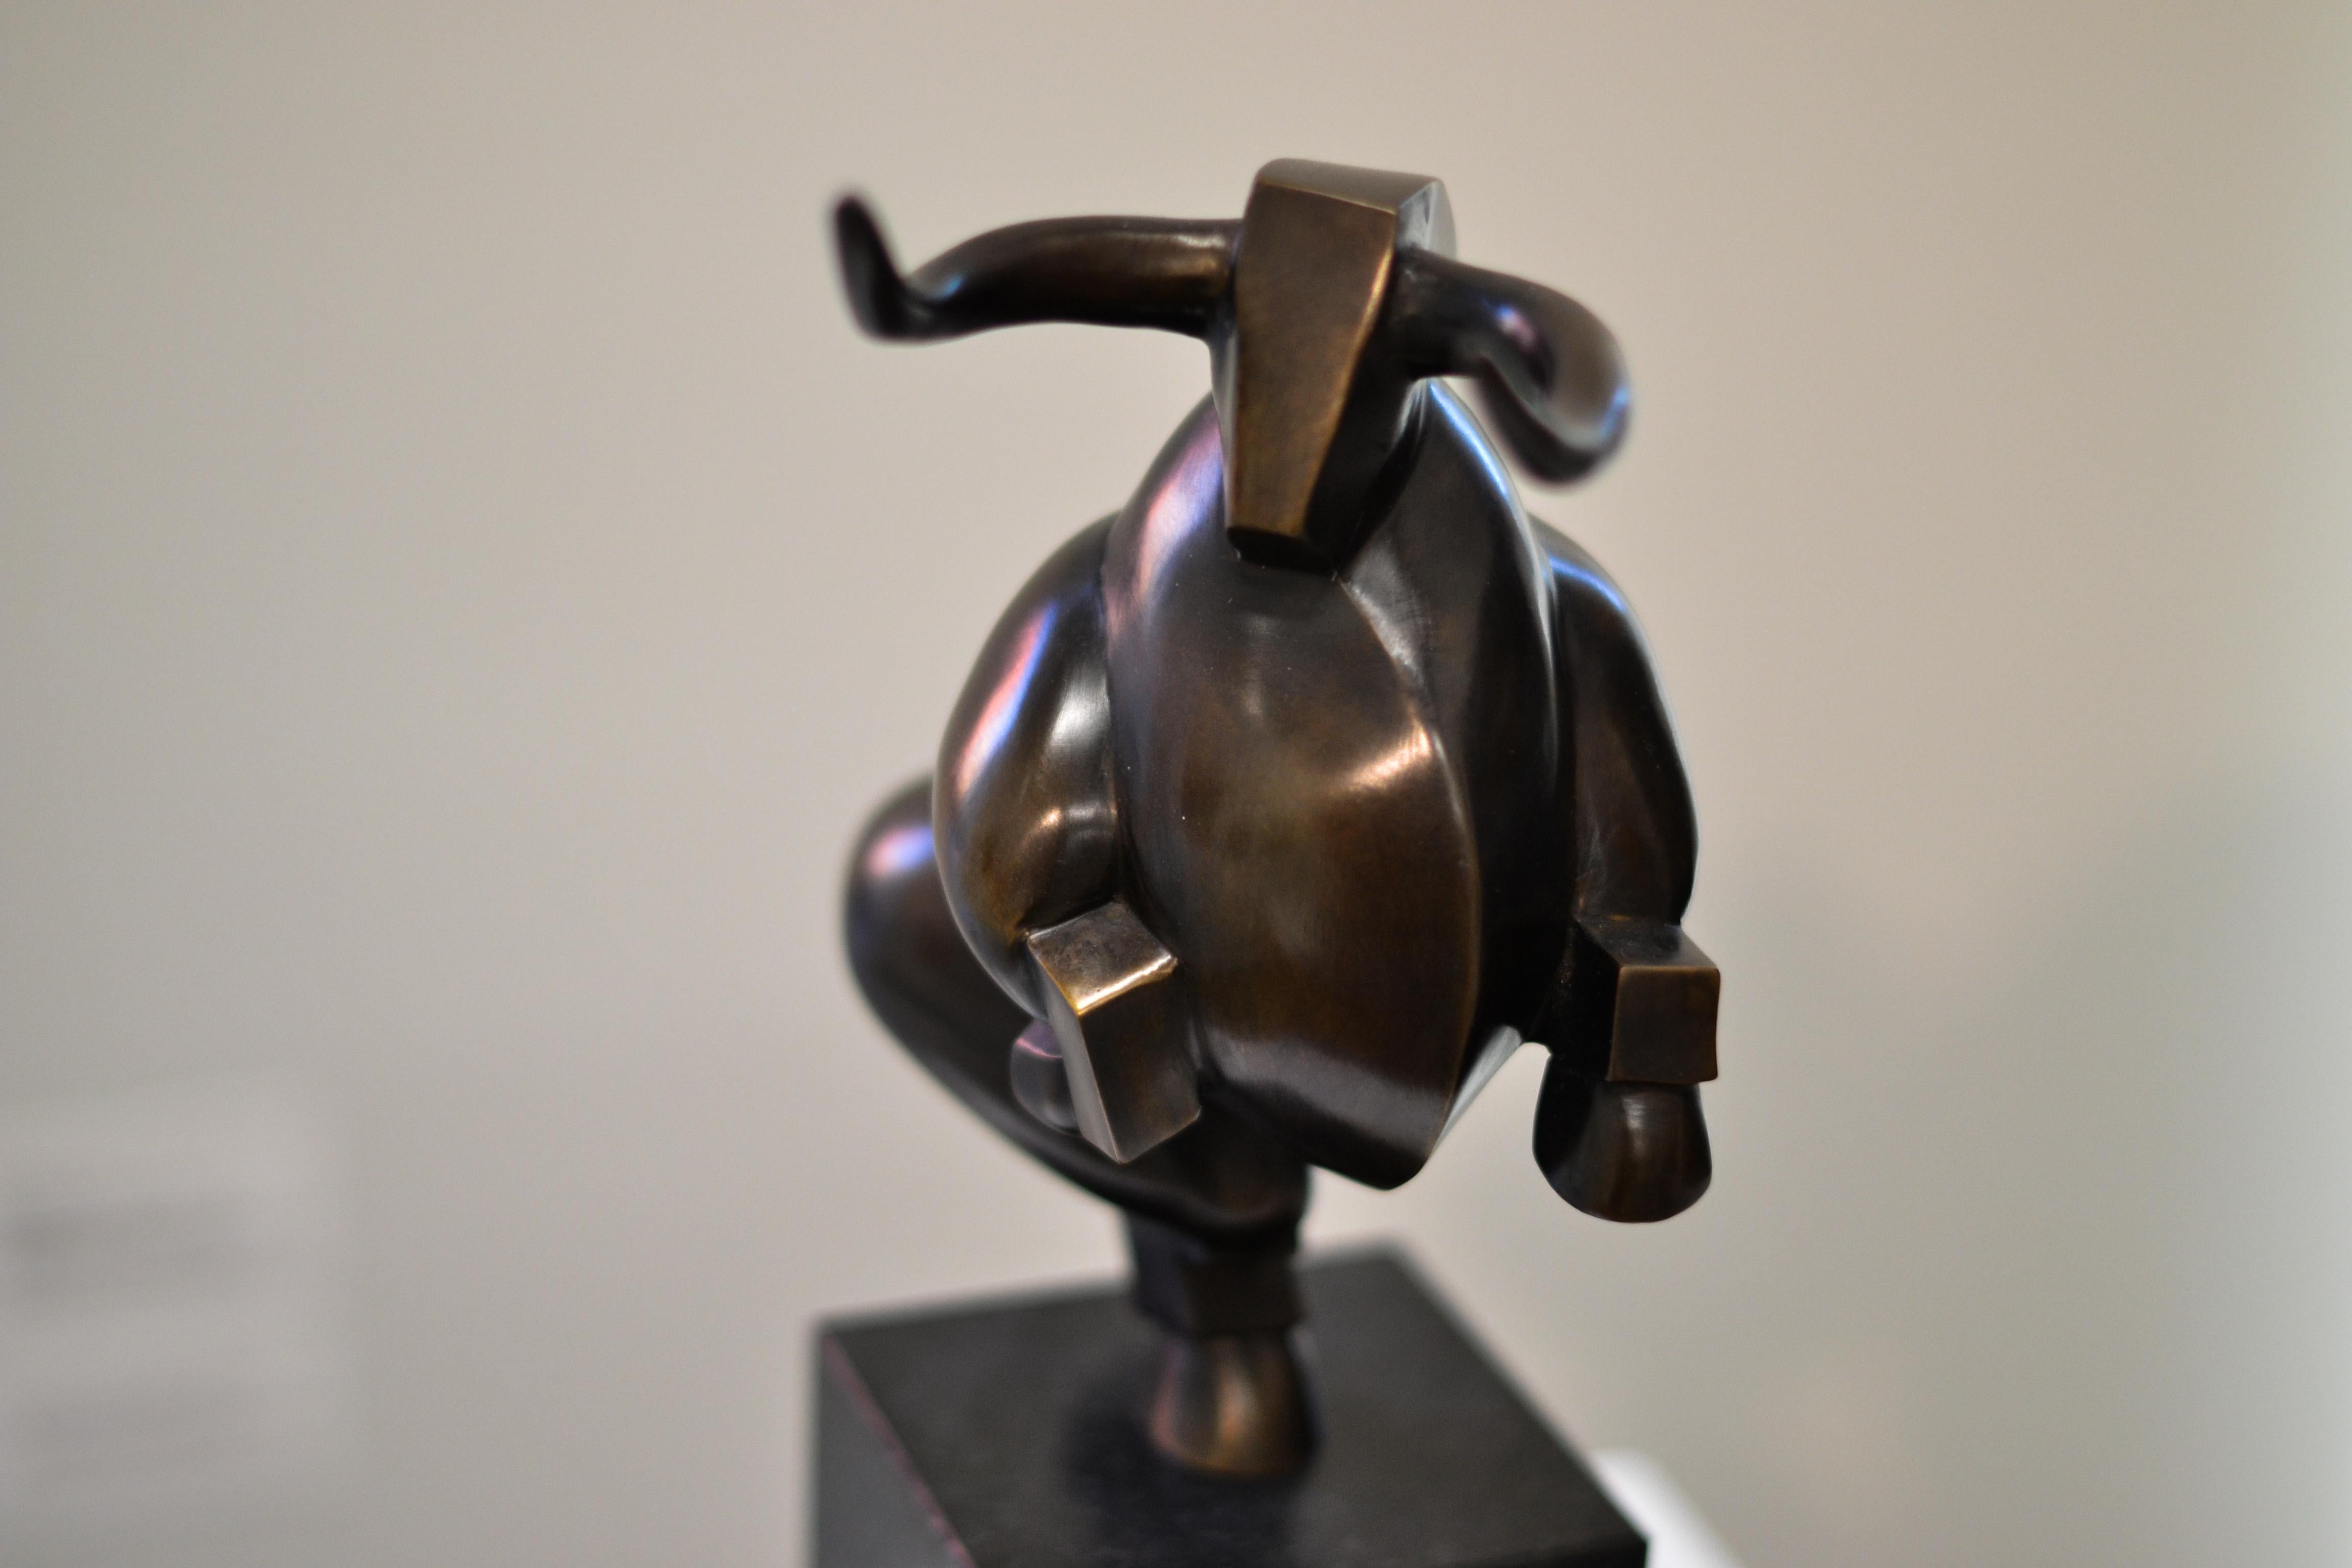 Frans van Straaten Abstract Sculpture - Taurus- 21st Century Contemporary Sculpture of a Prancing Bull